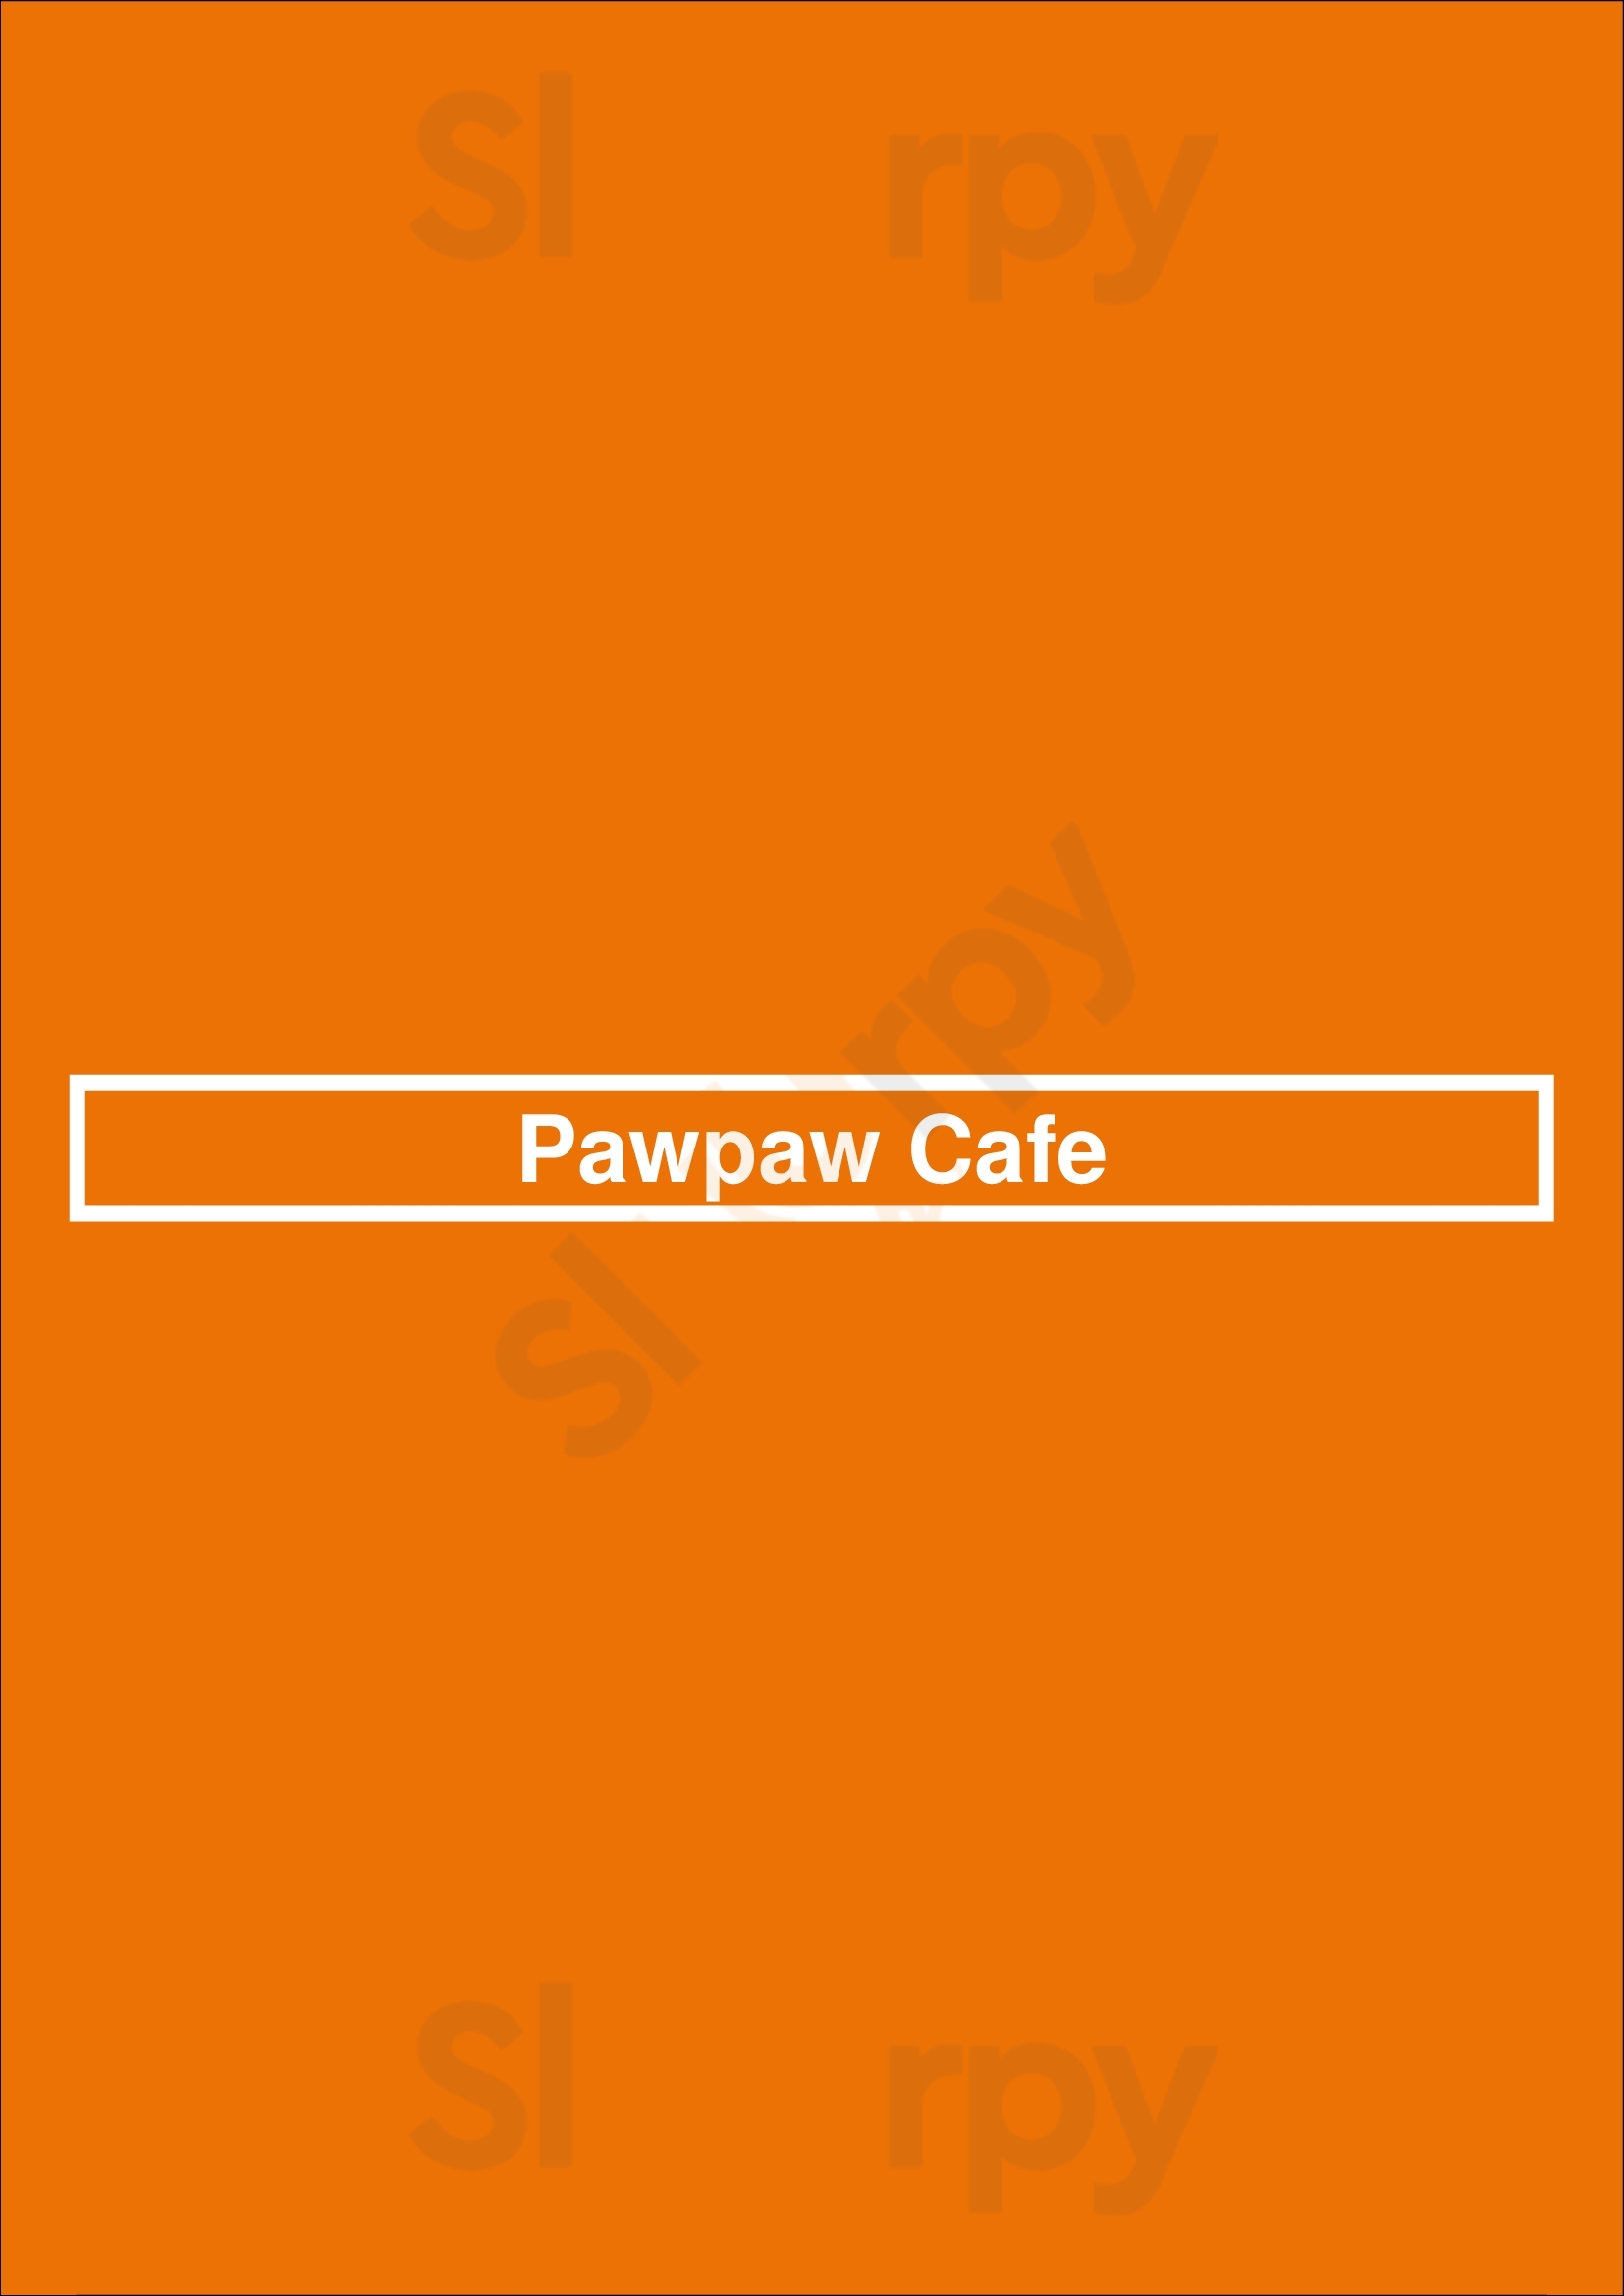 Pawpaw Cafe Brisbane Menu - 1